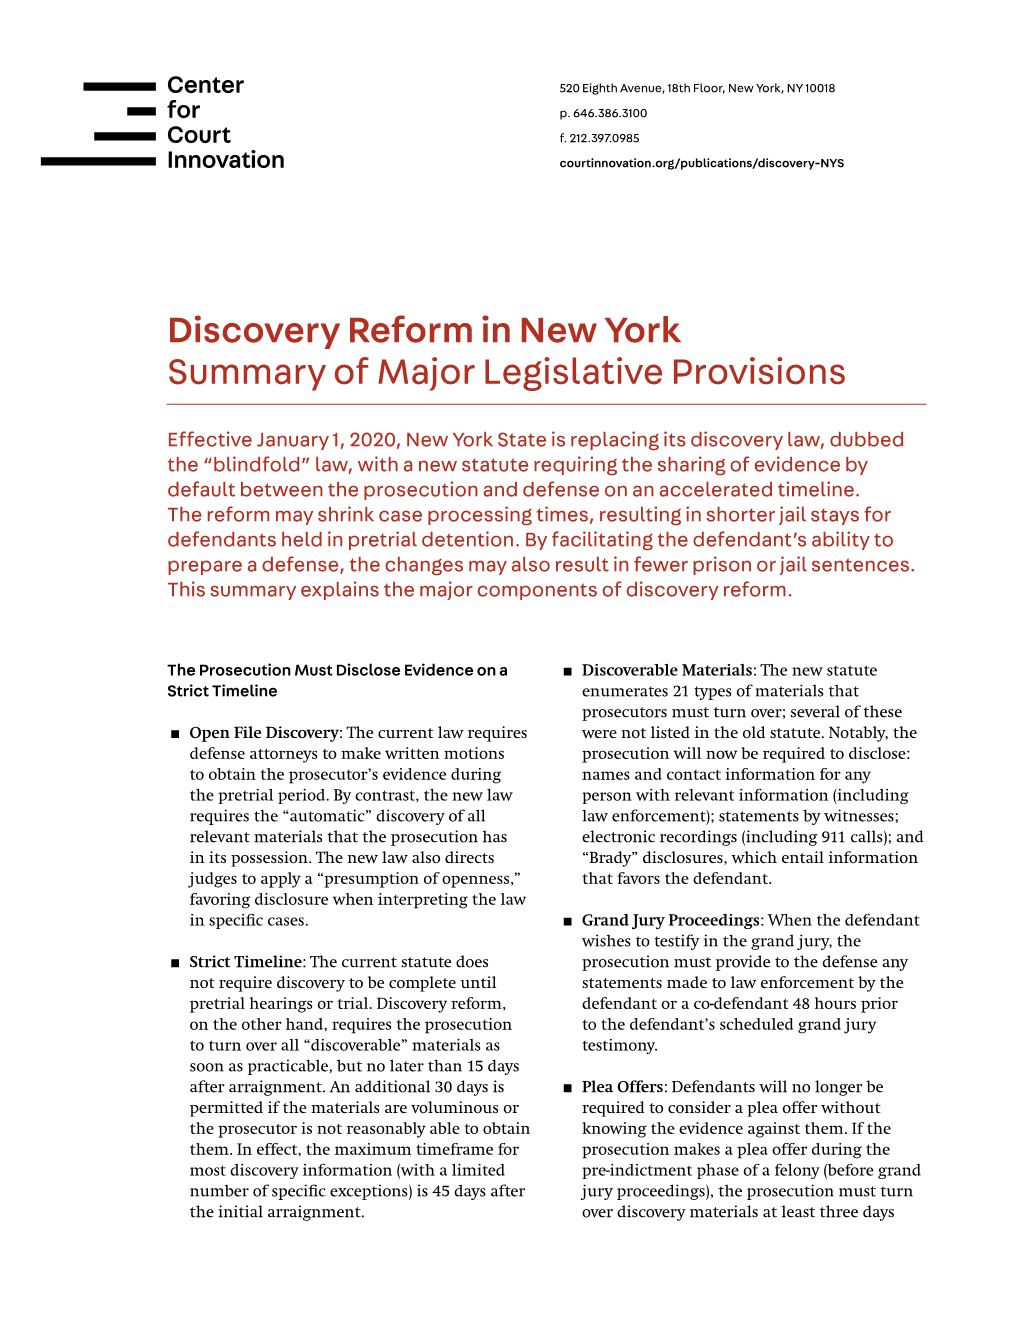 Discovery Reform in New York Summary of Major Legislative Provisions